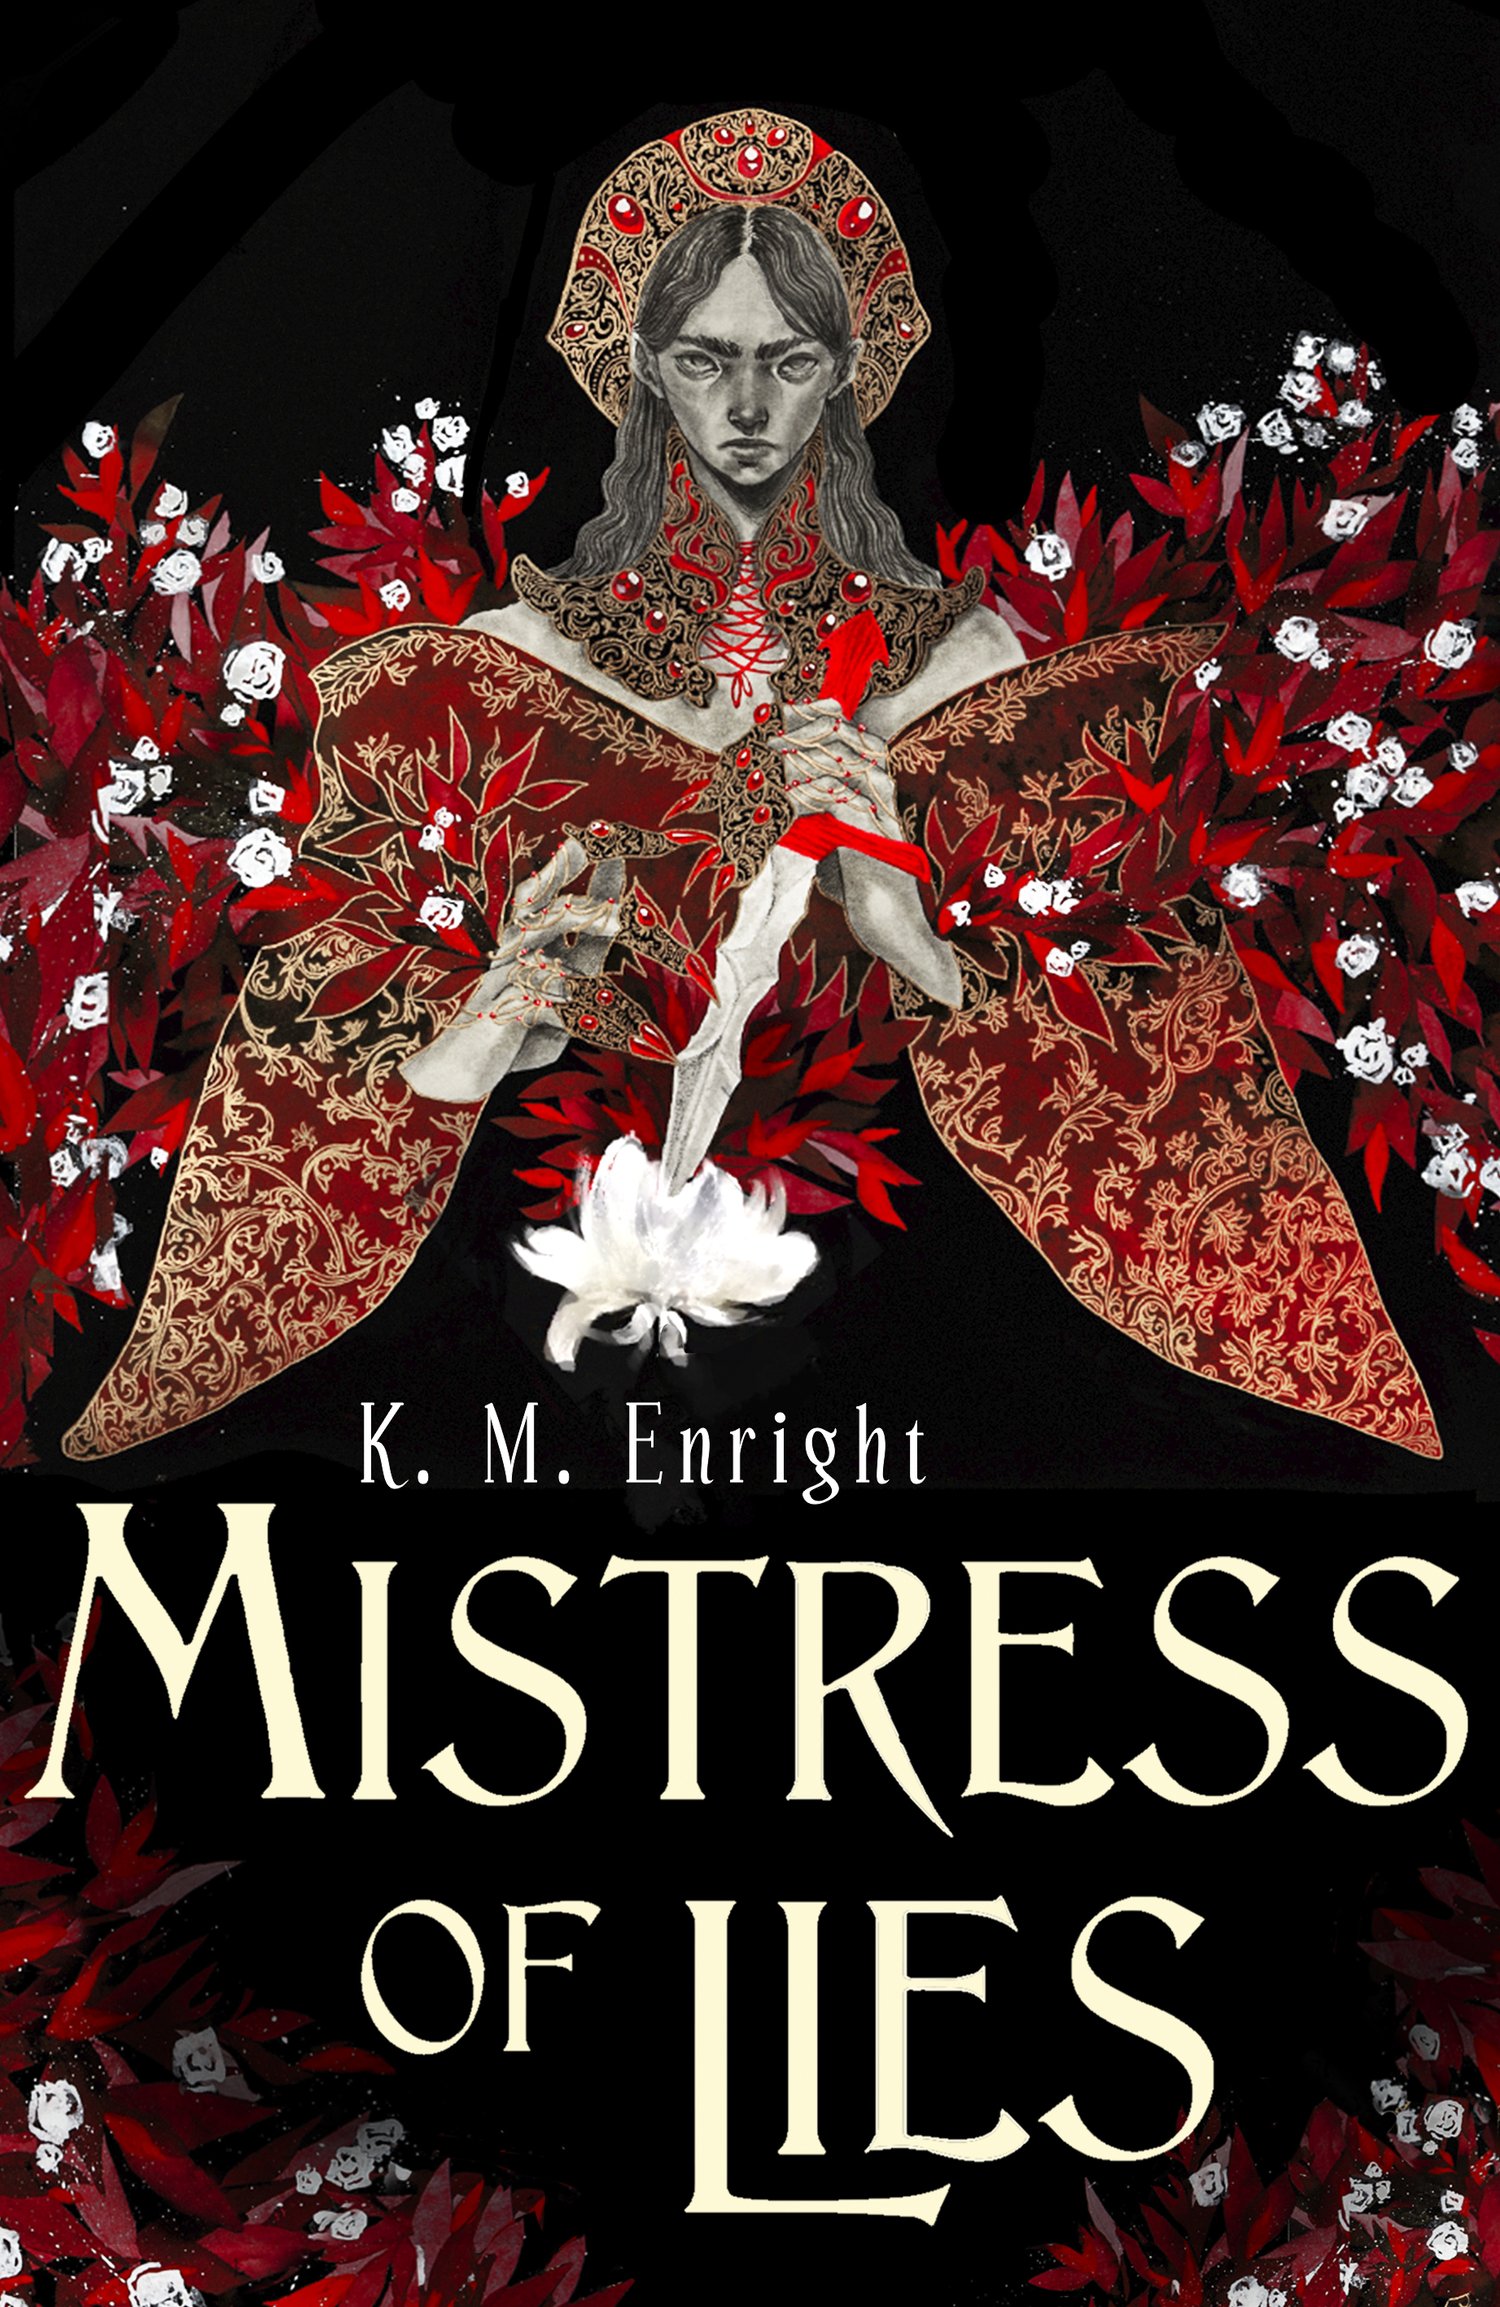 K. M. Enright's novel Mistress of Lies